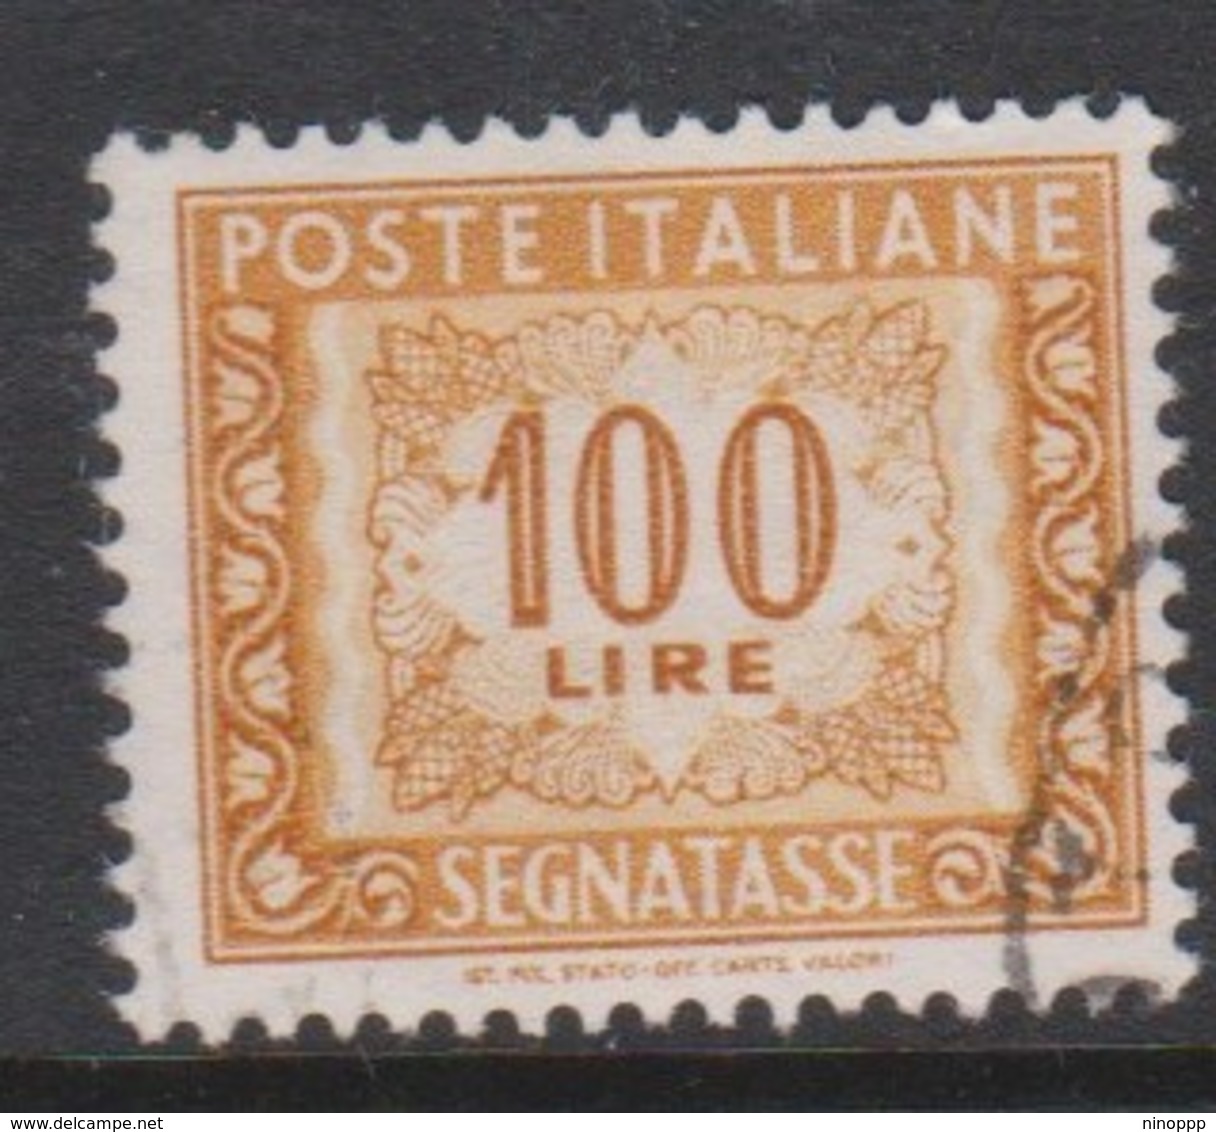 Italy PD 119  1955-81 Republic  Postage Due,watermark Stars,lire 100 Orange Yellow,used - Portomarken